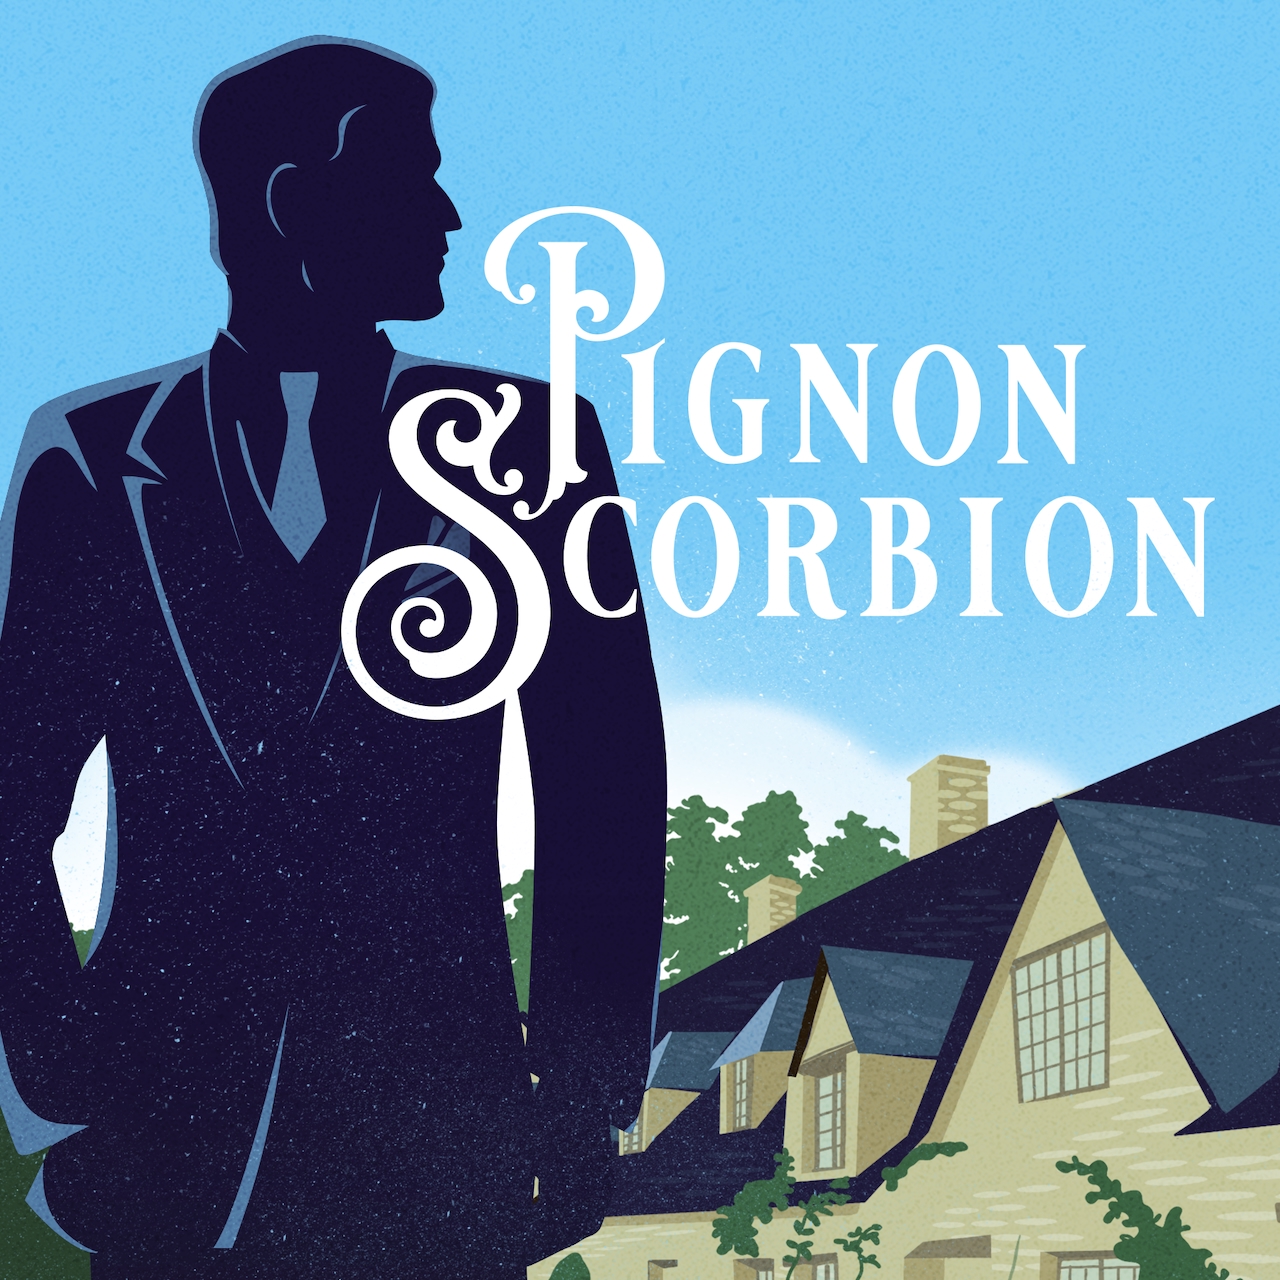 Pignon Scorbion & The Barbershop Detectives (Blackstone Publishing, Feb 8, 2022) features Author Rick Bleiweiss' new Police Chief Inspector Pignon Scorbion (think Sherlock Holmes & Hercule Poirot).